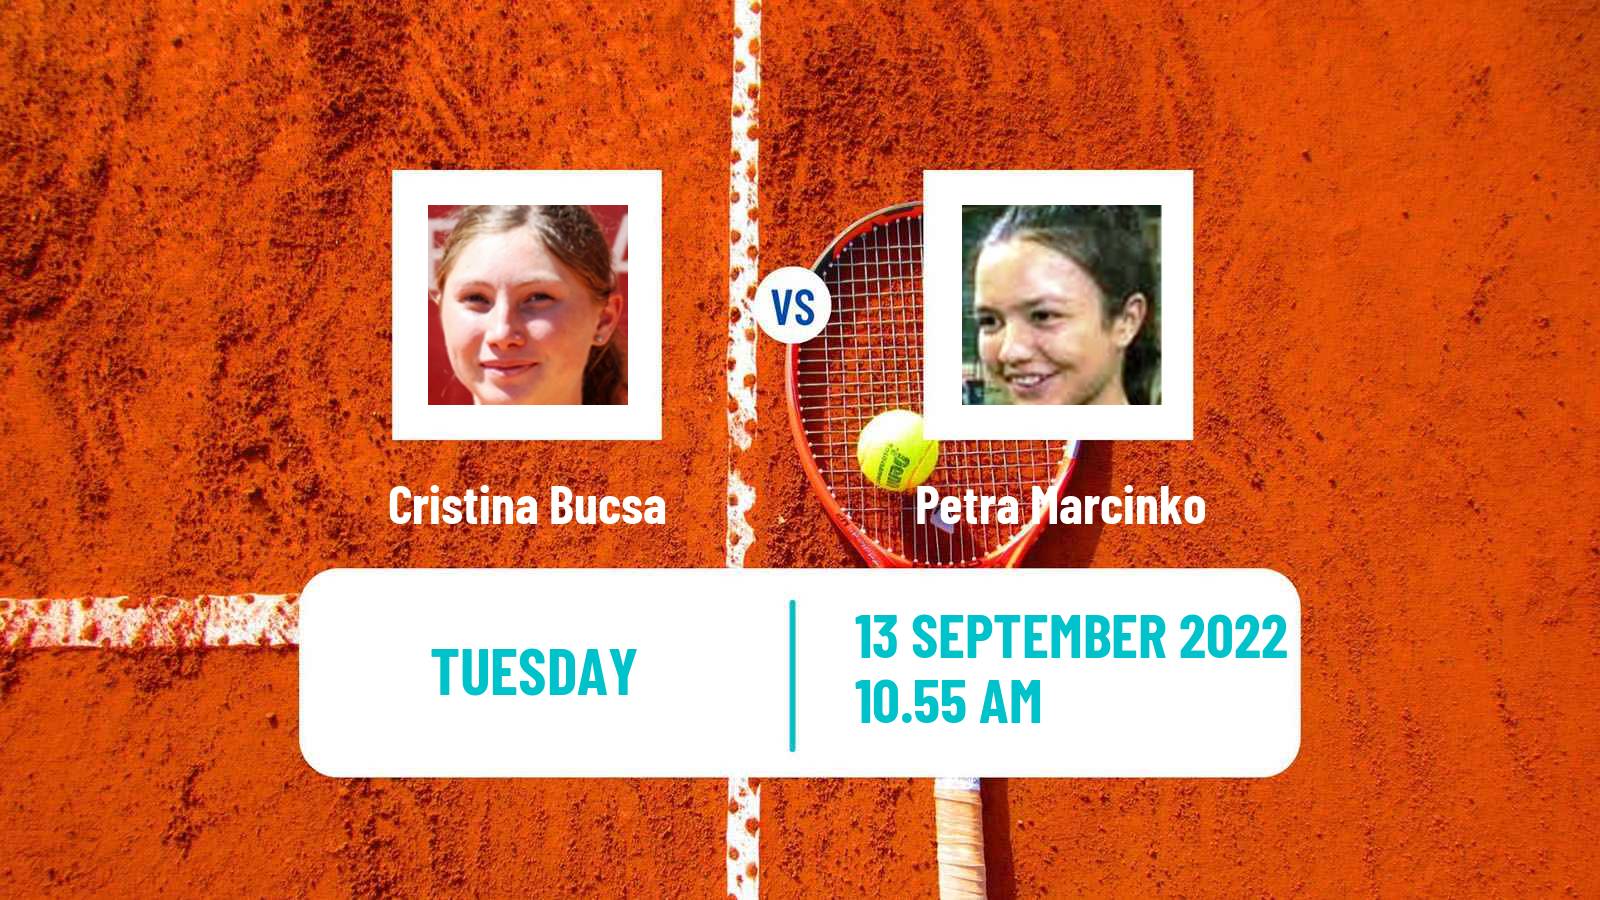 Tennis WTA Portoroz Cristina Bucsa - Petra Marcinko